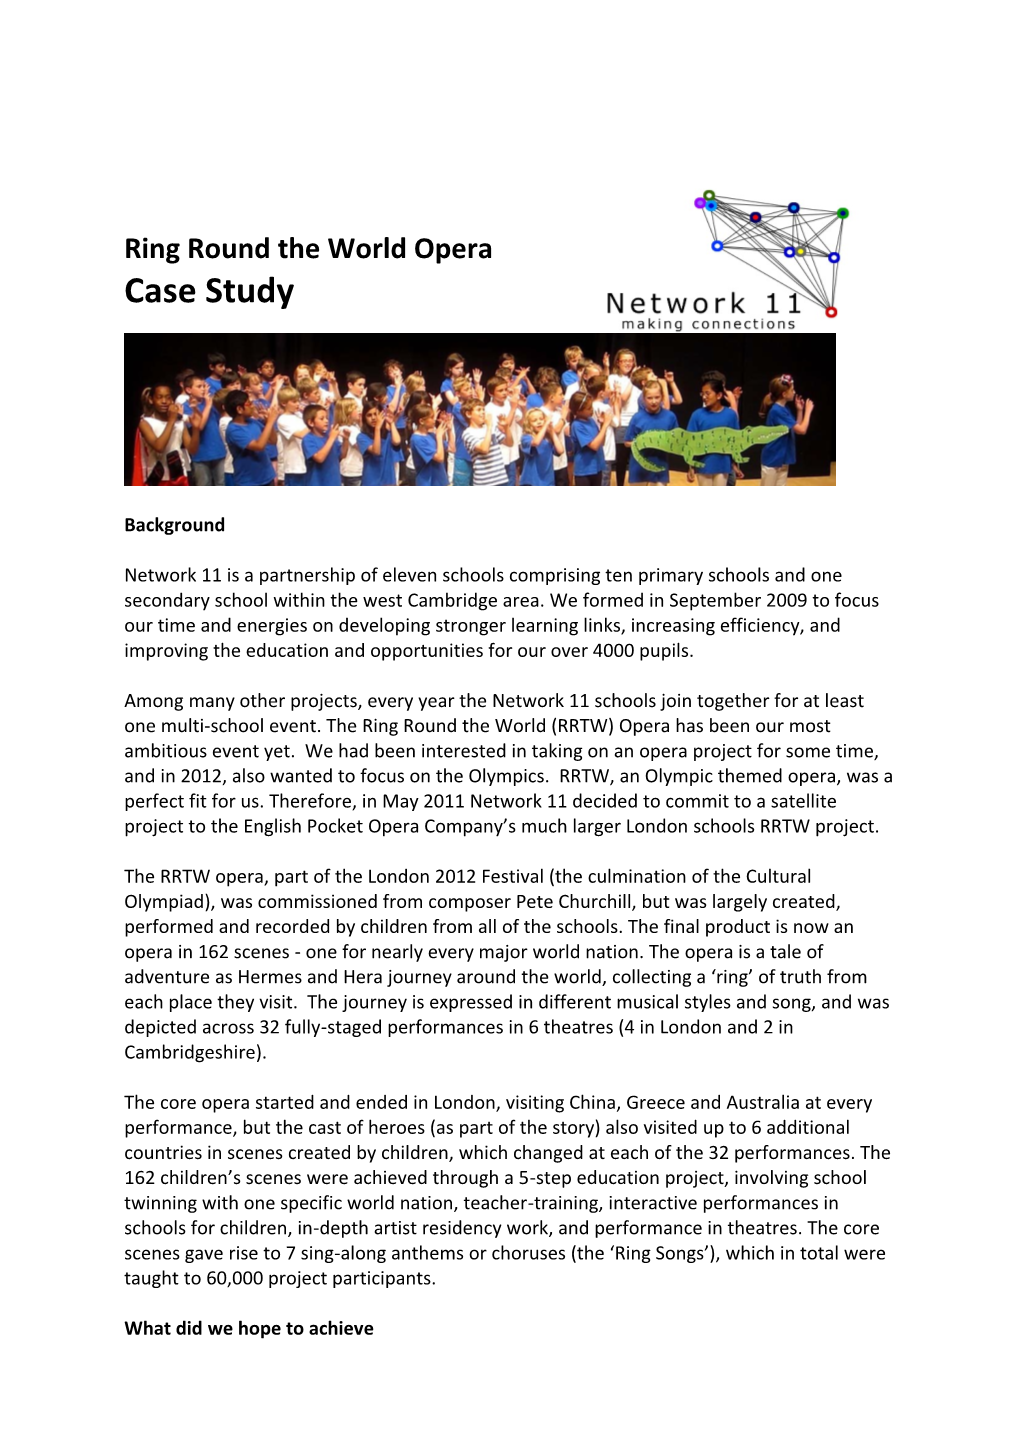 Ring Round the World Opera Case Study